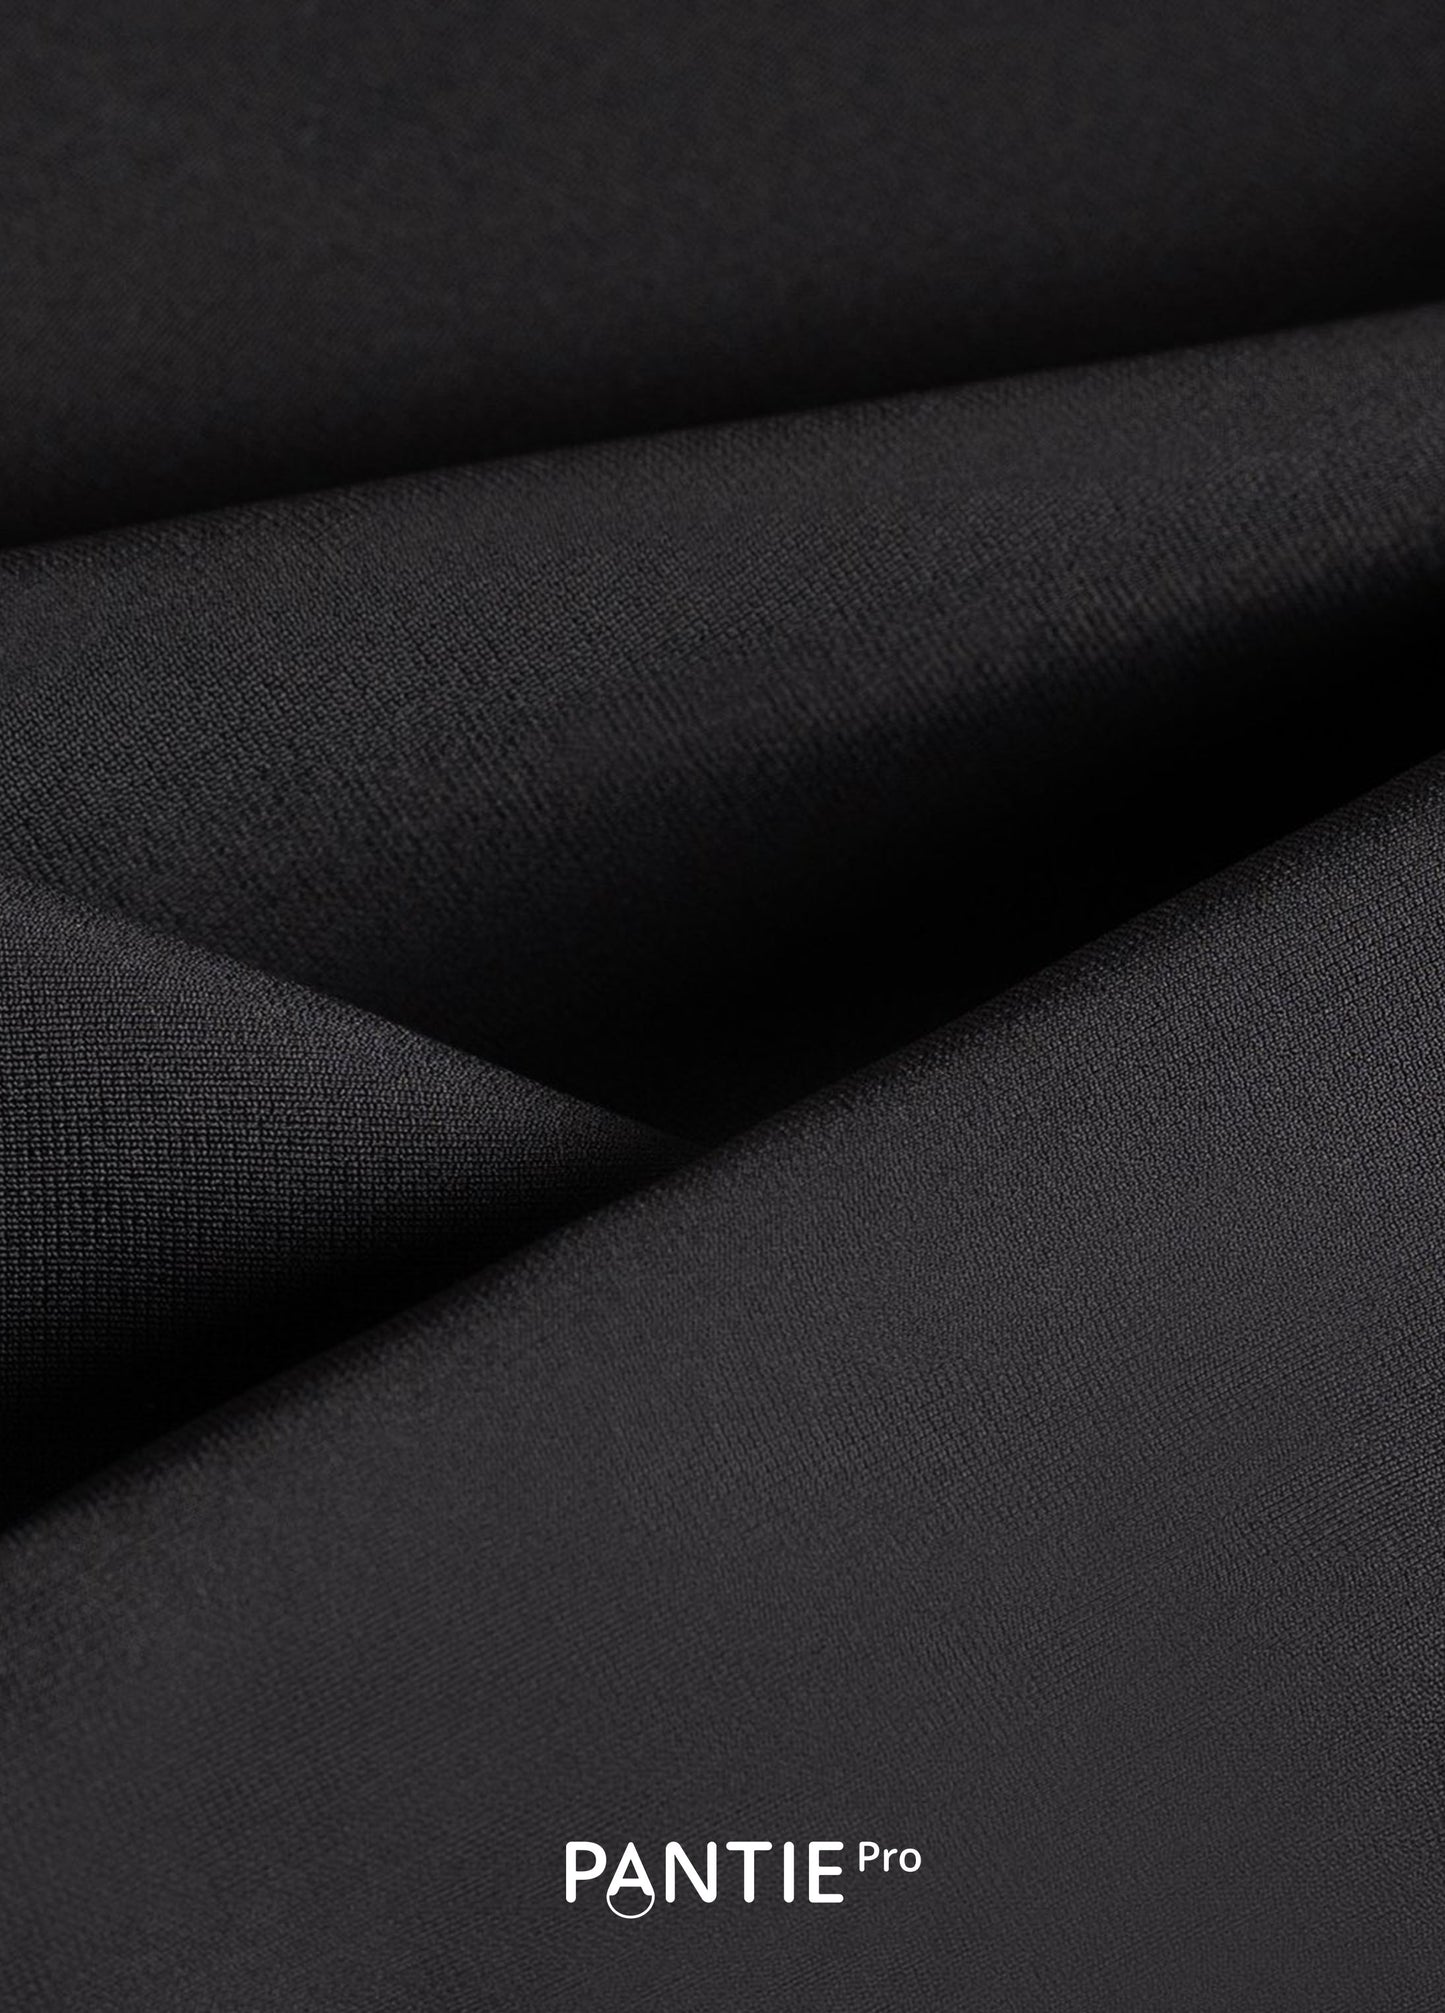 close up of black fabric